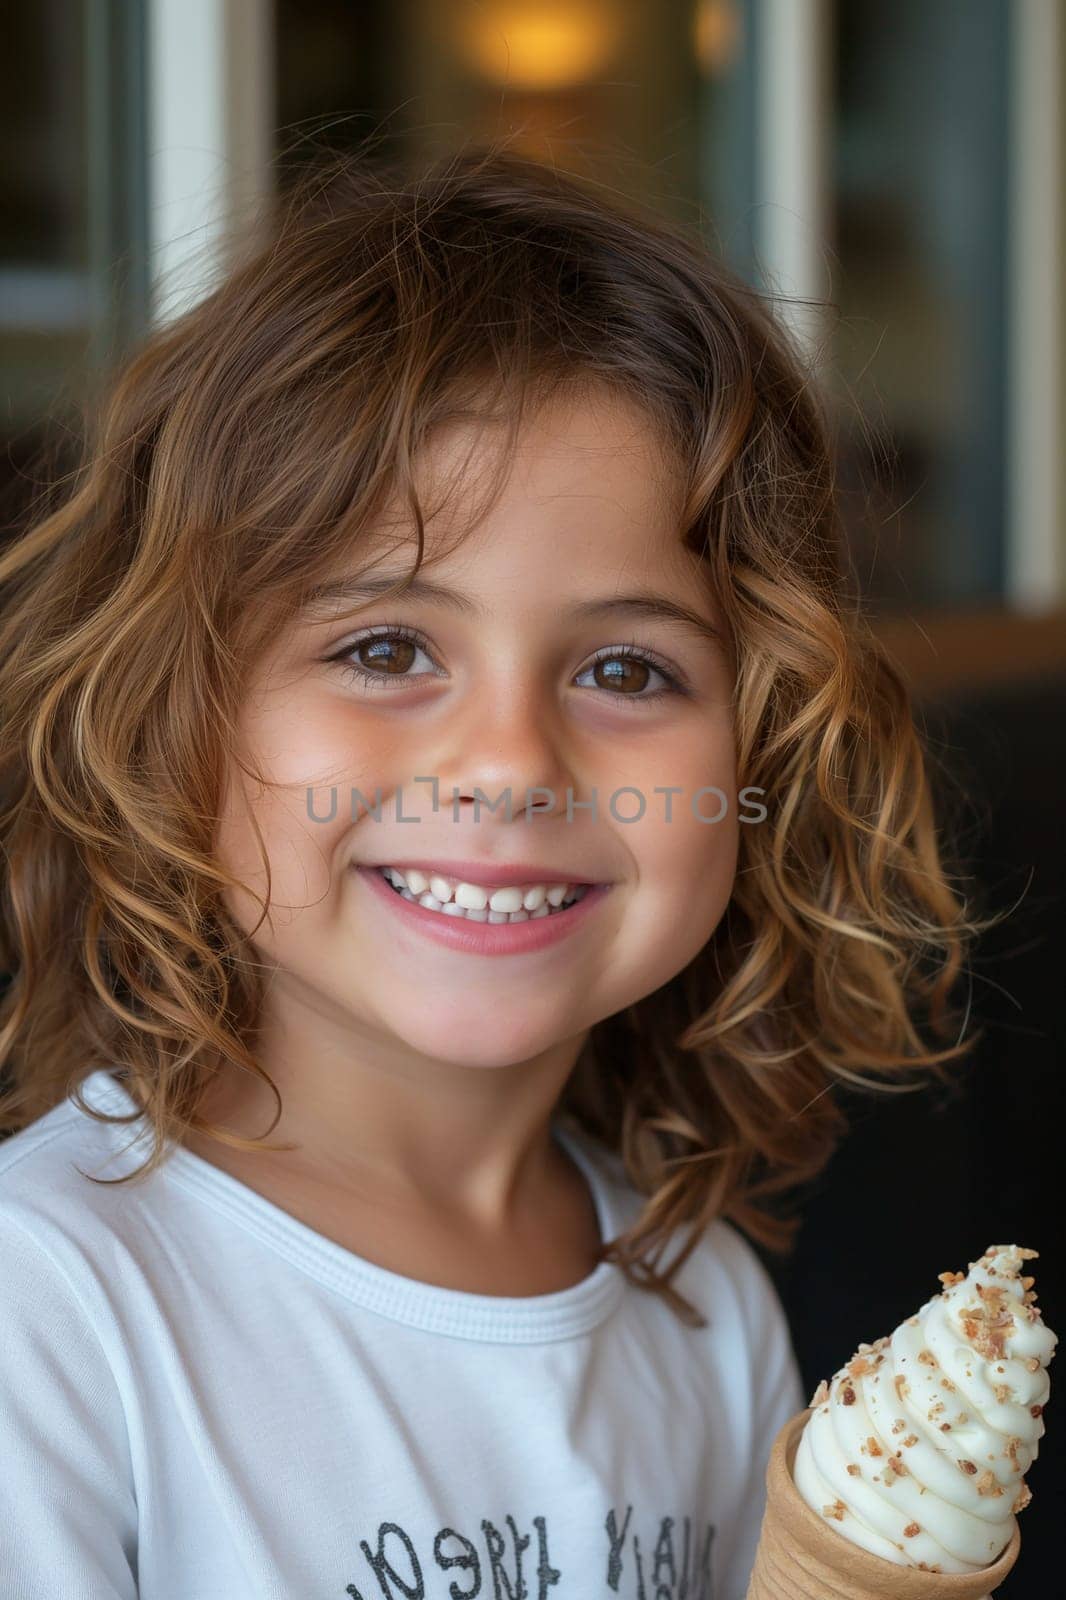 A joyful child with an ice cream cone by Hype2art